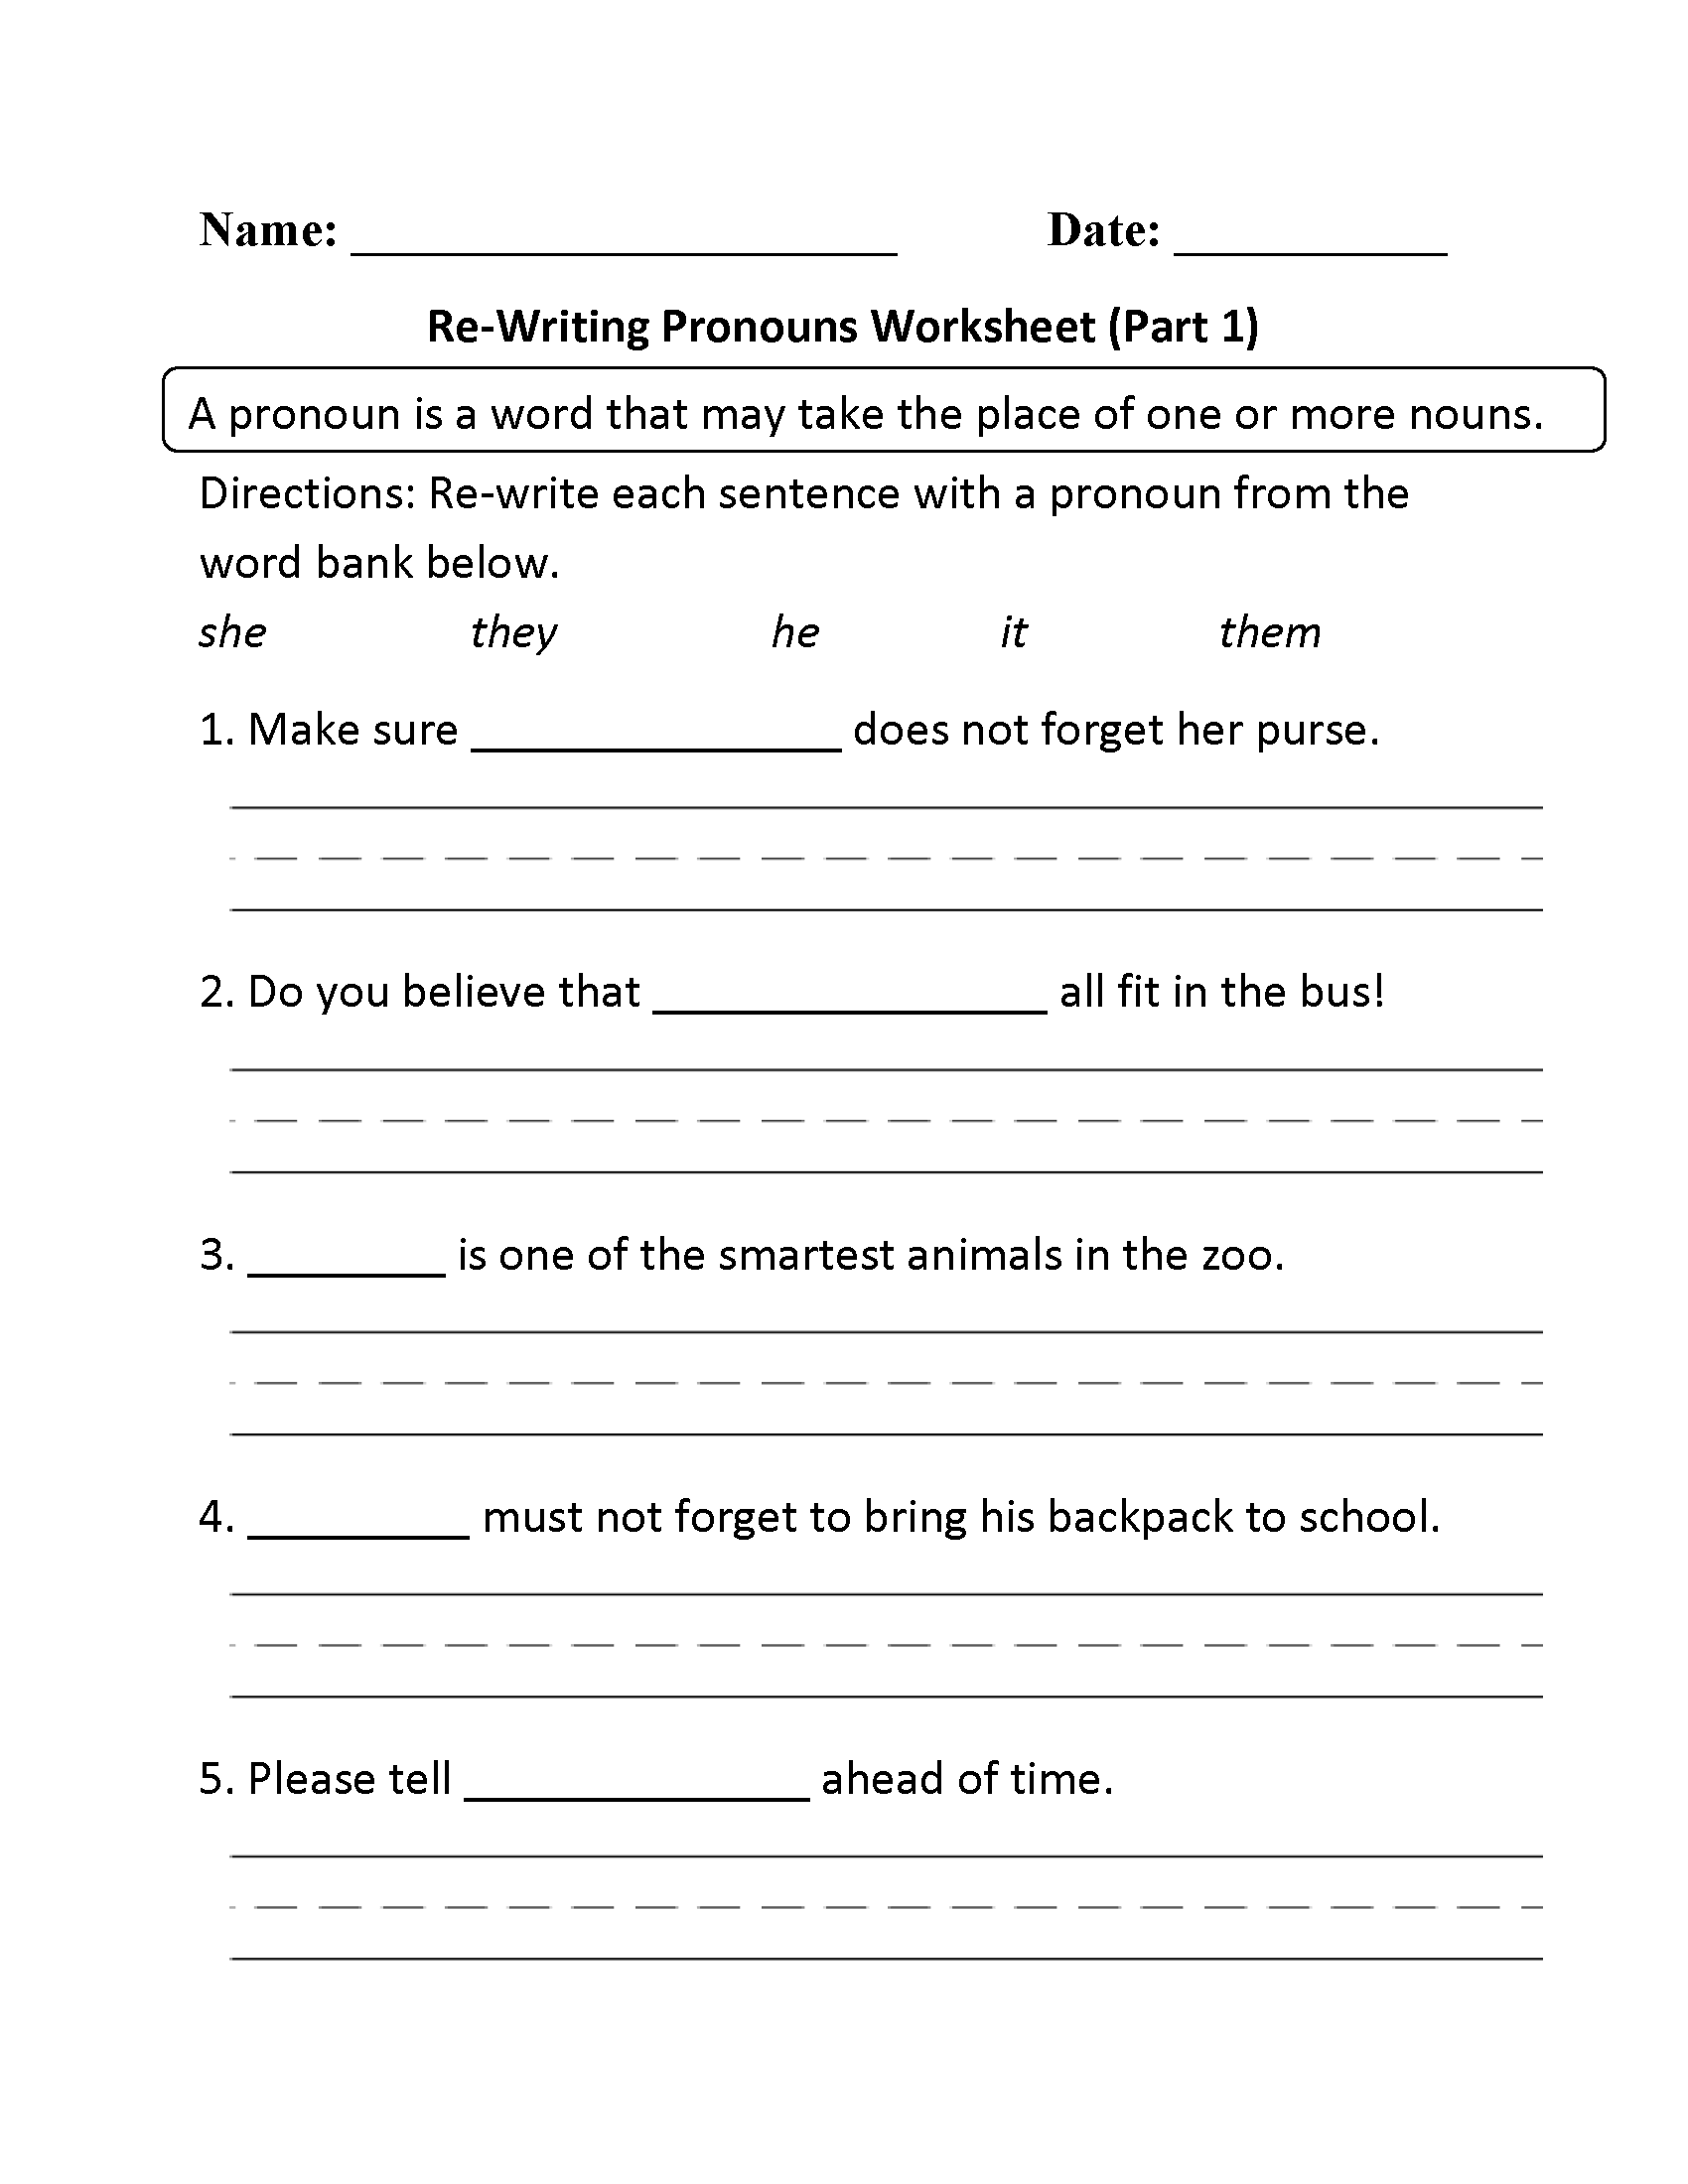 Re-Writing Pronouns Worksheet Part 1